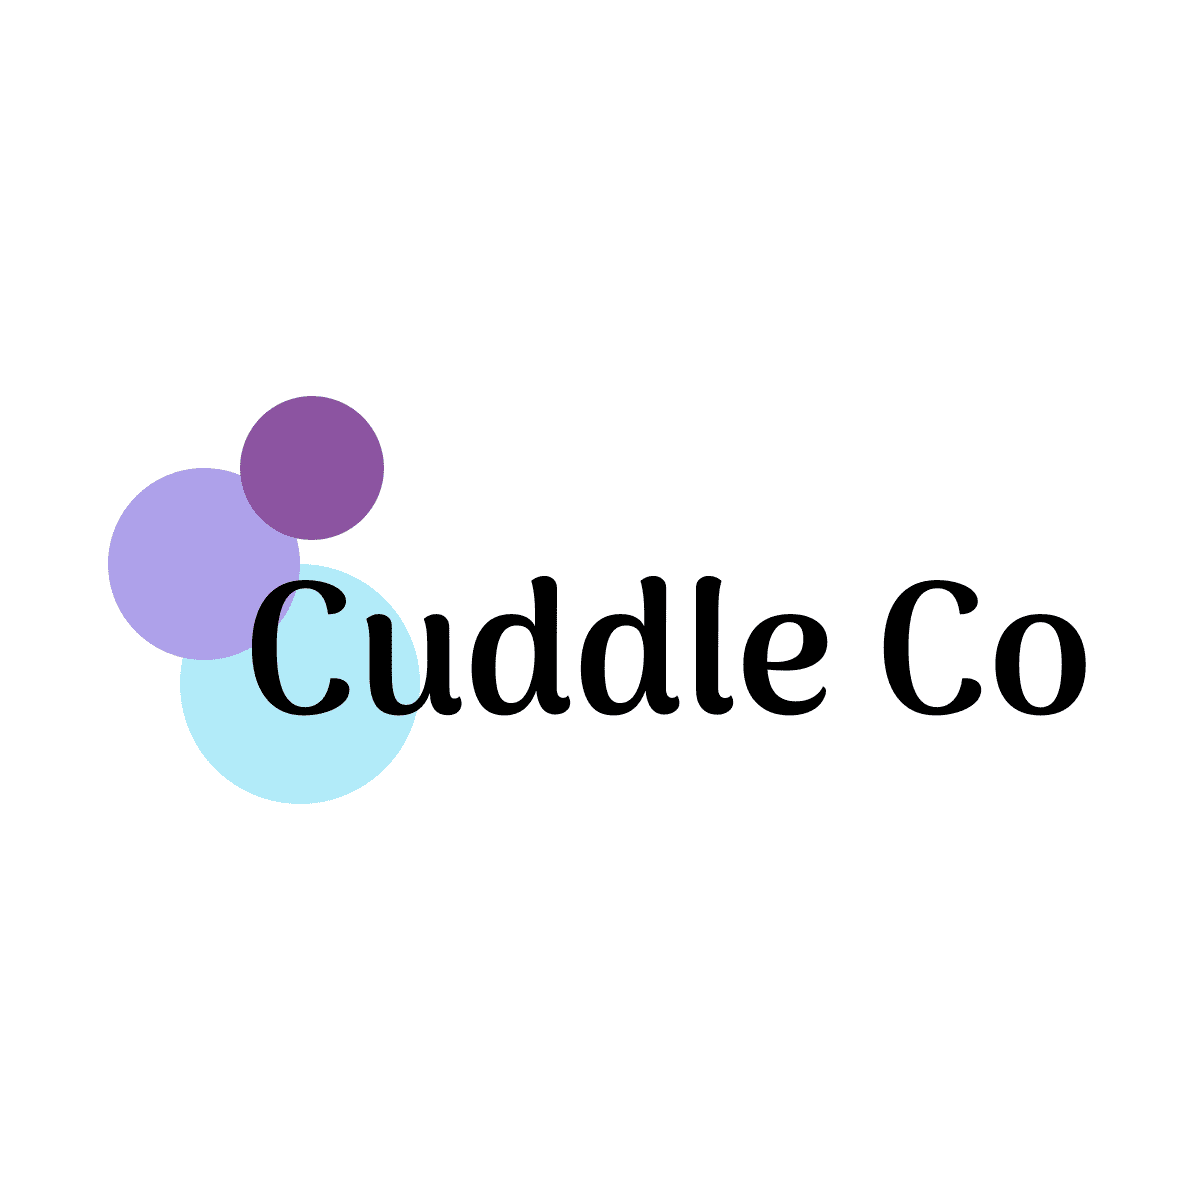 cuddleco